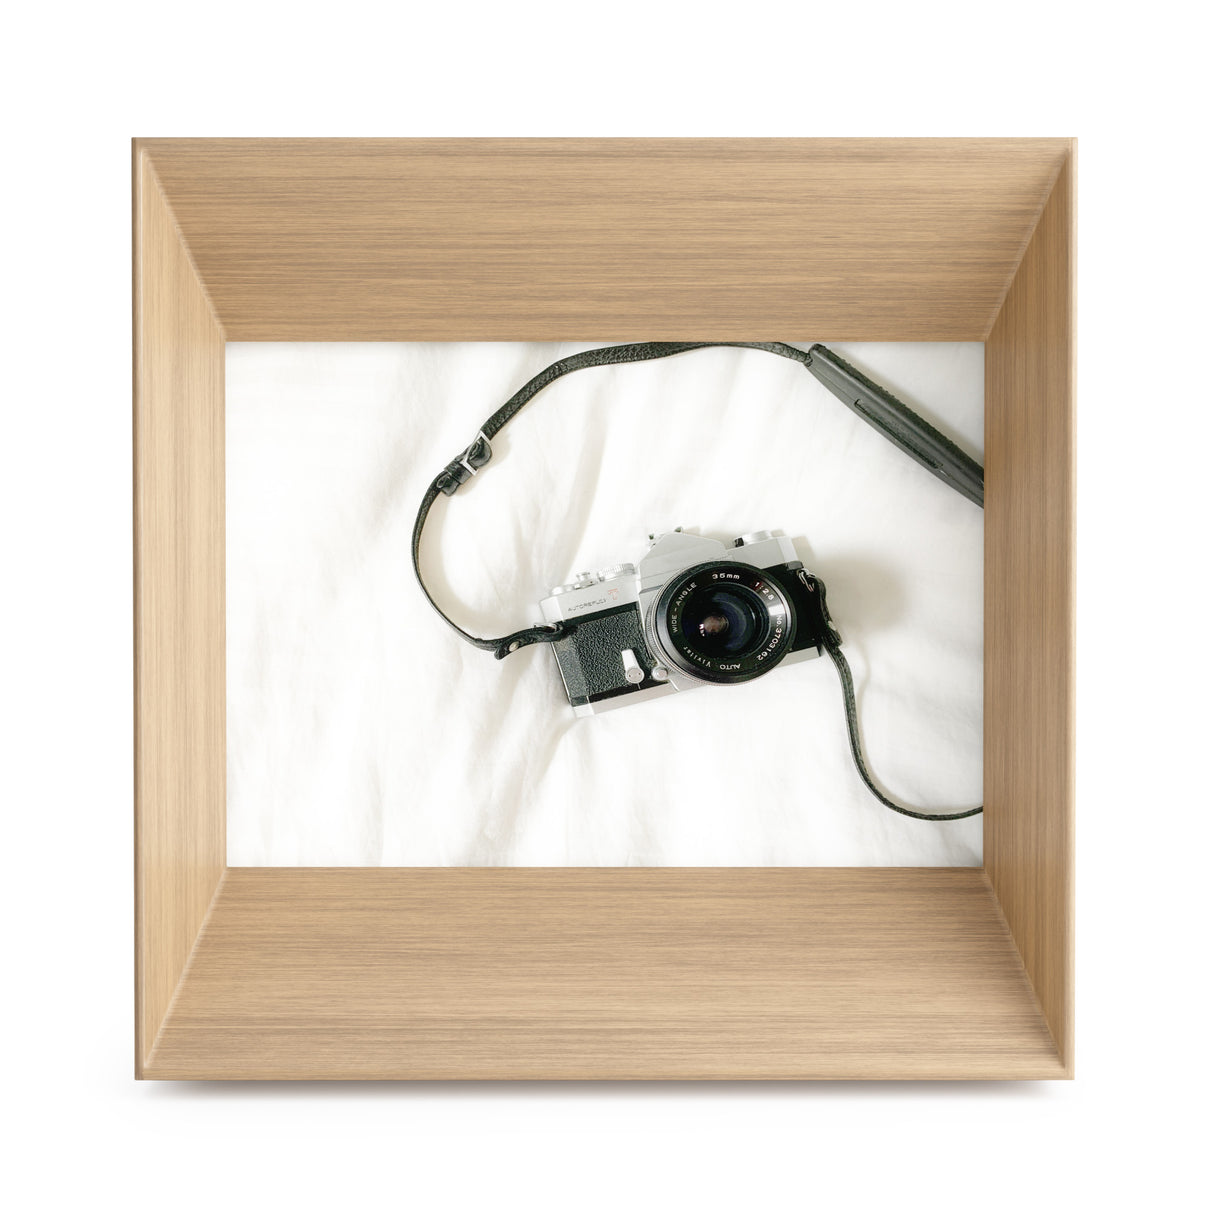 Tabletop Frames | color: Natural | size: 5x7" (13x18 cm)